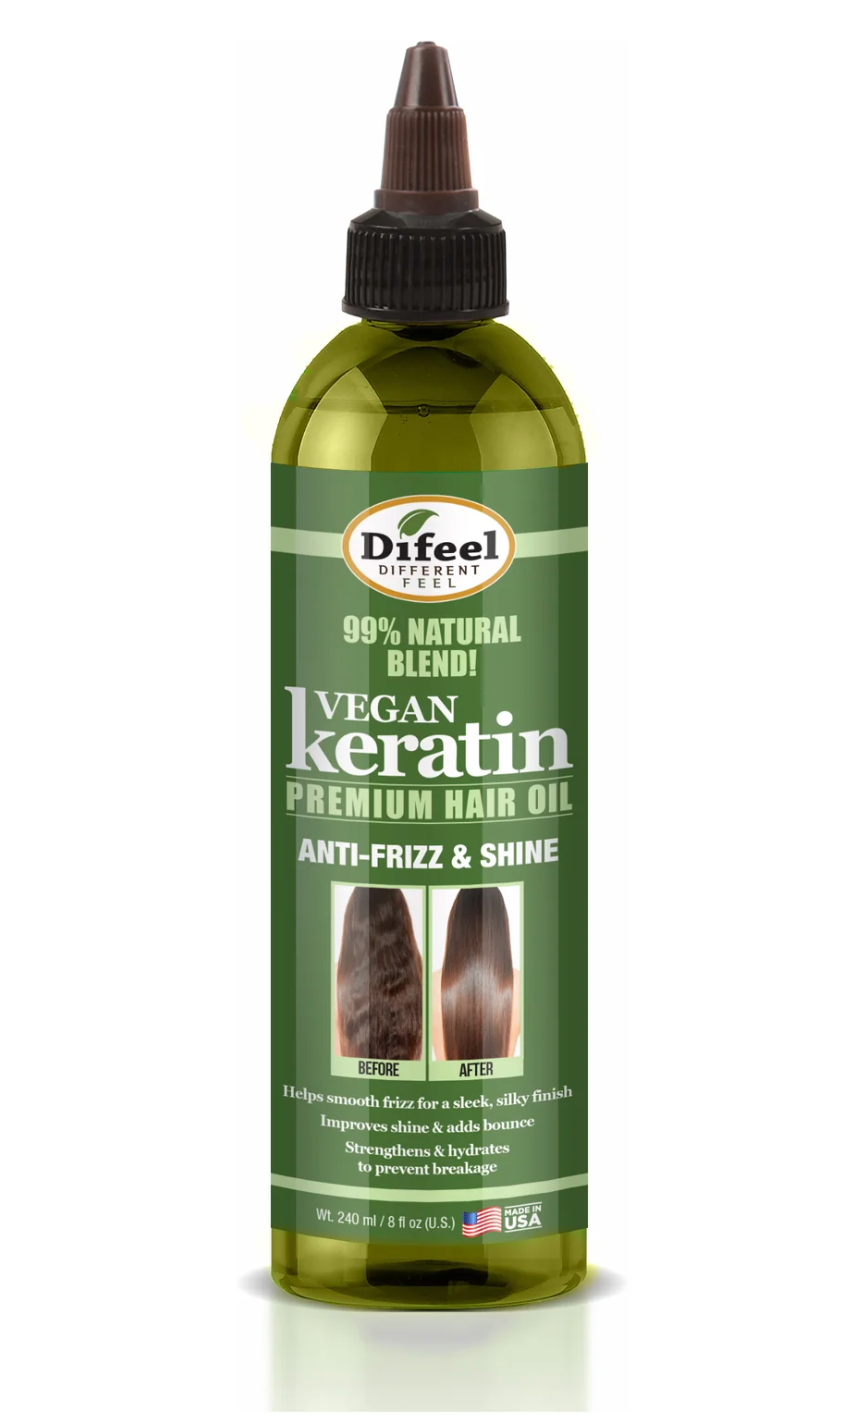 Difeel Vegan Keratin Premium Hair Oil$